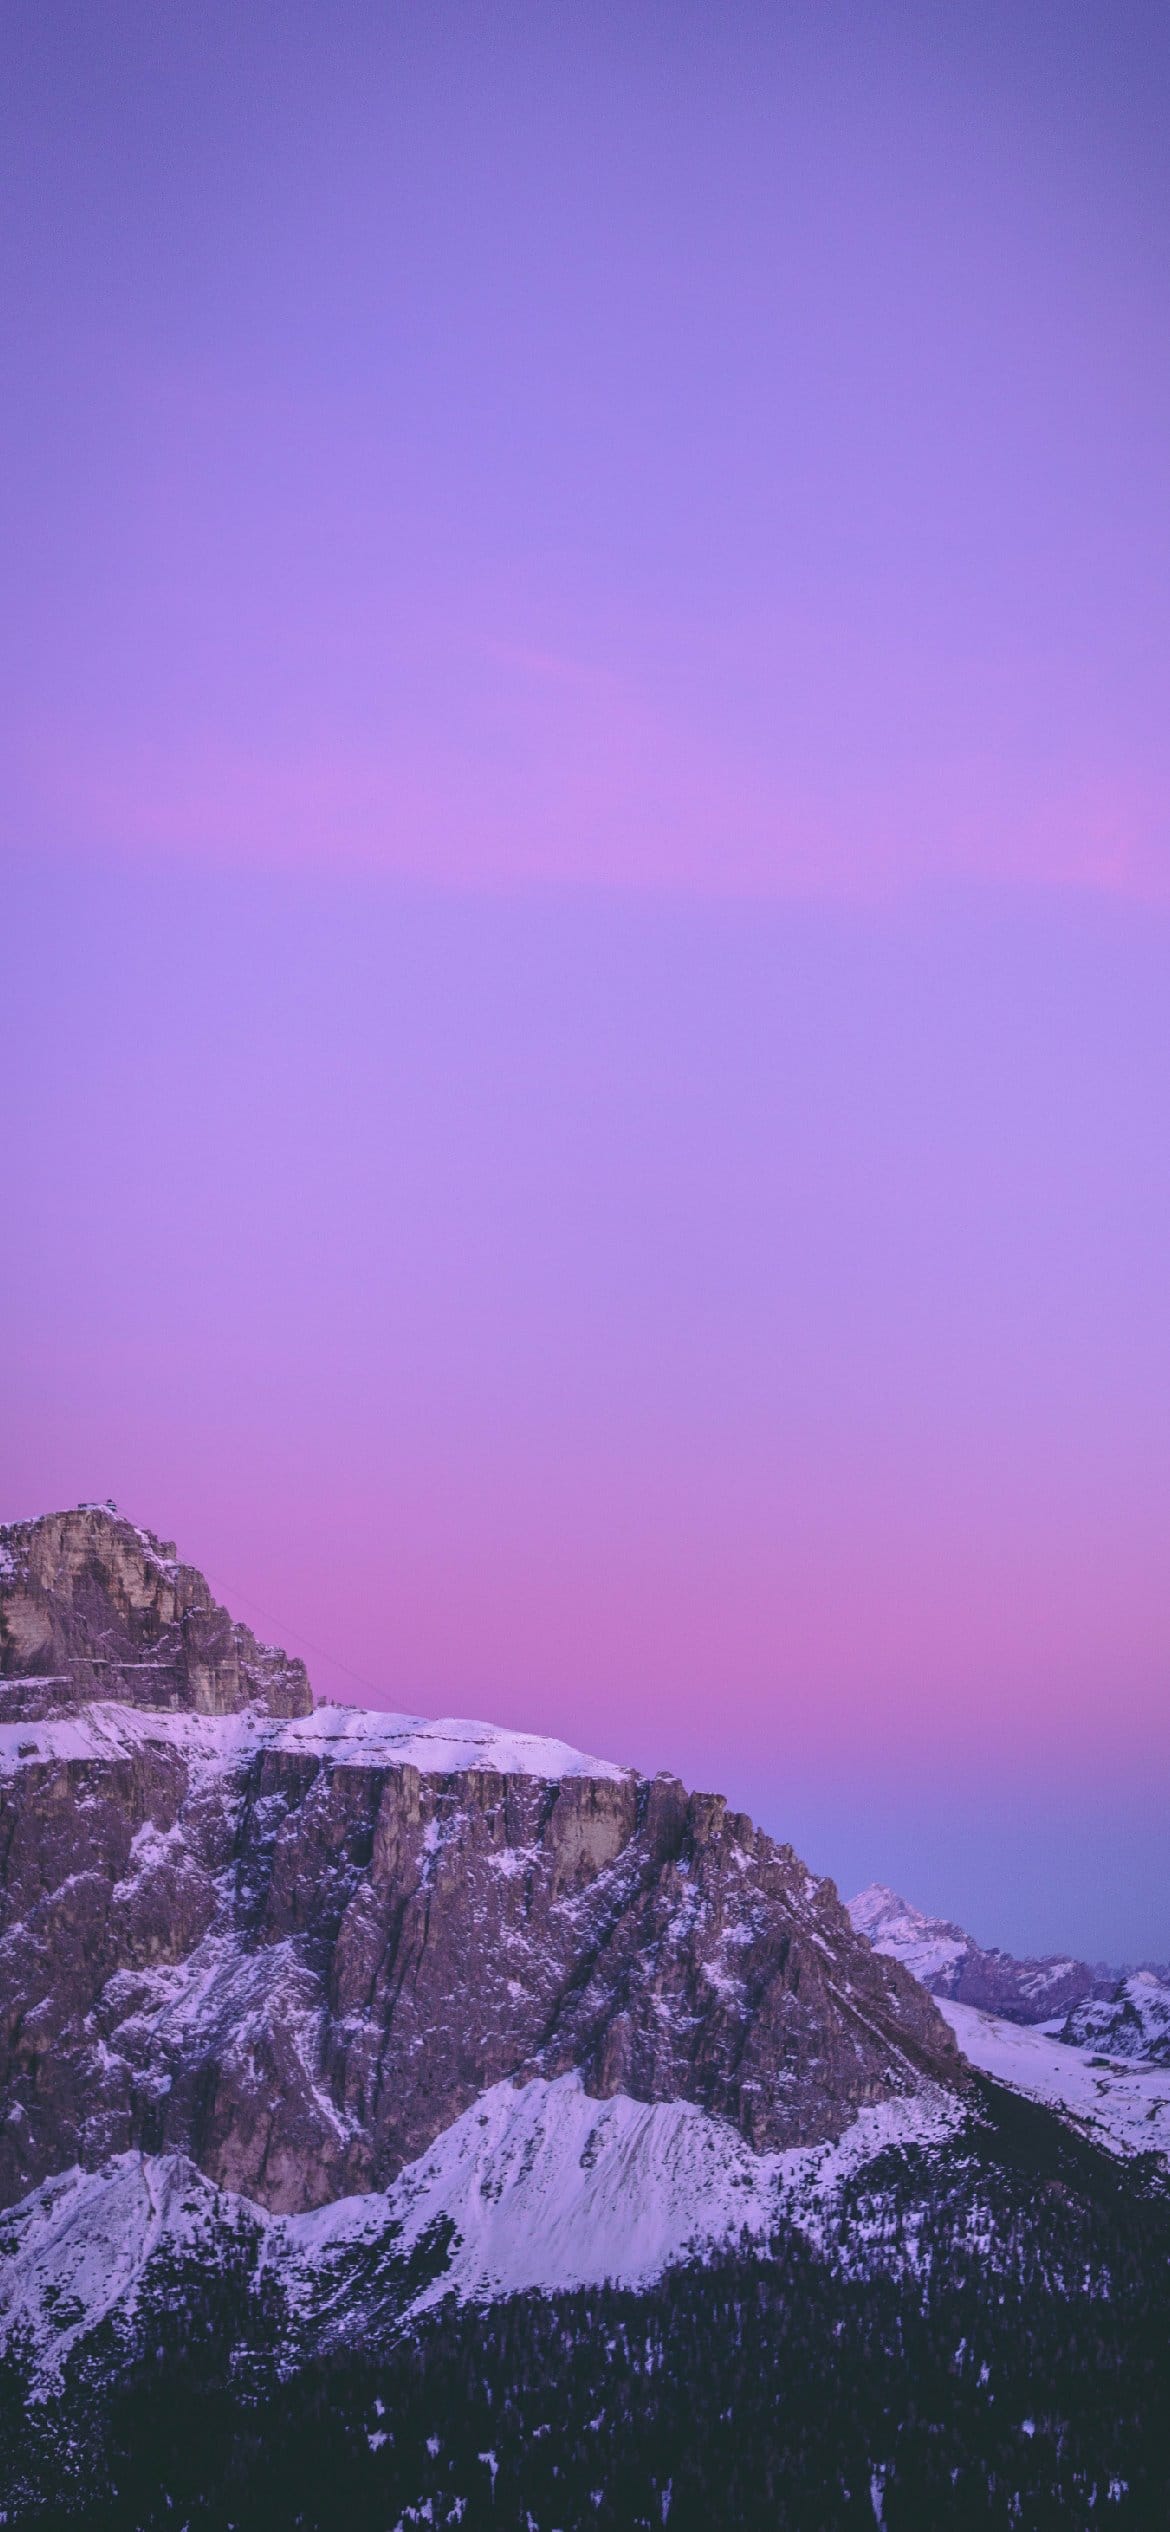 A mountain with snow on it at sunset - Purple, pastel purple, light purple, christian iPhone, iPhone, sky, violet, cute purple